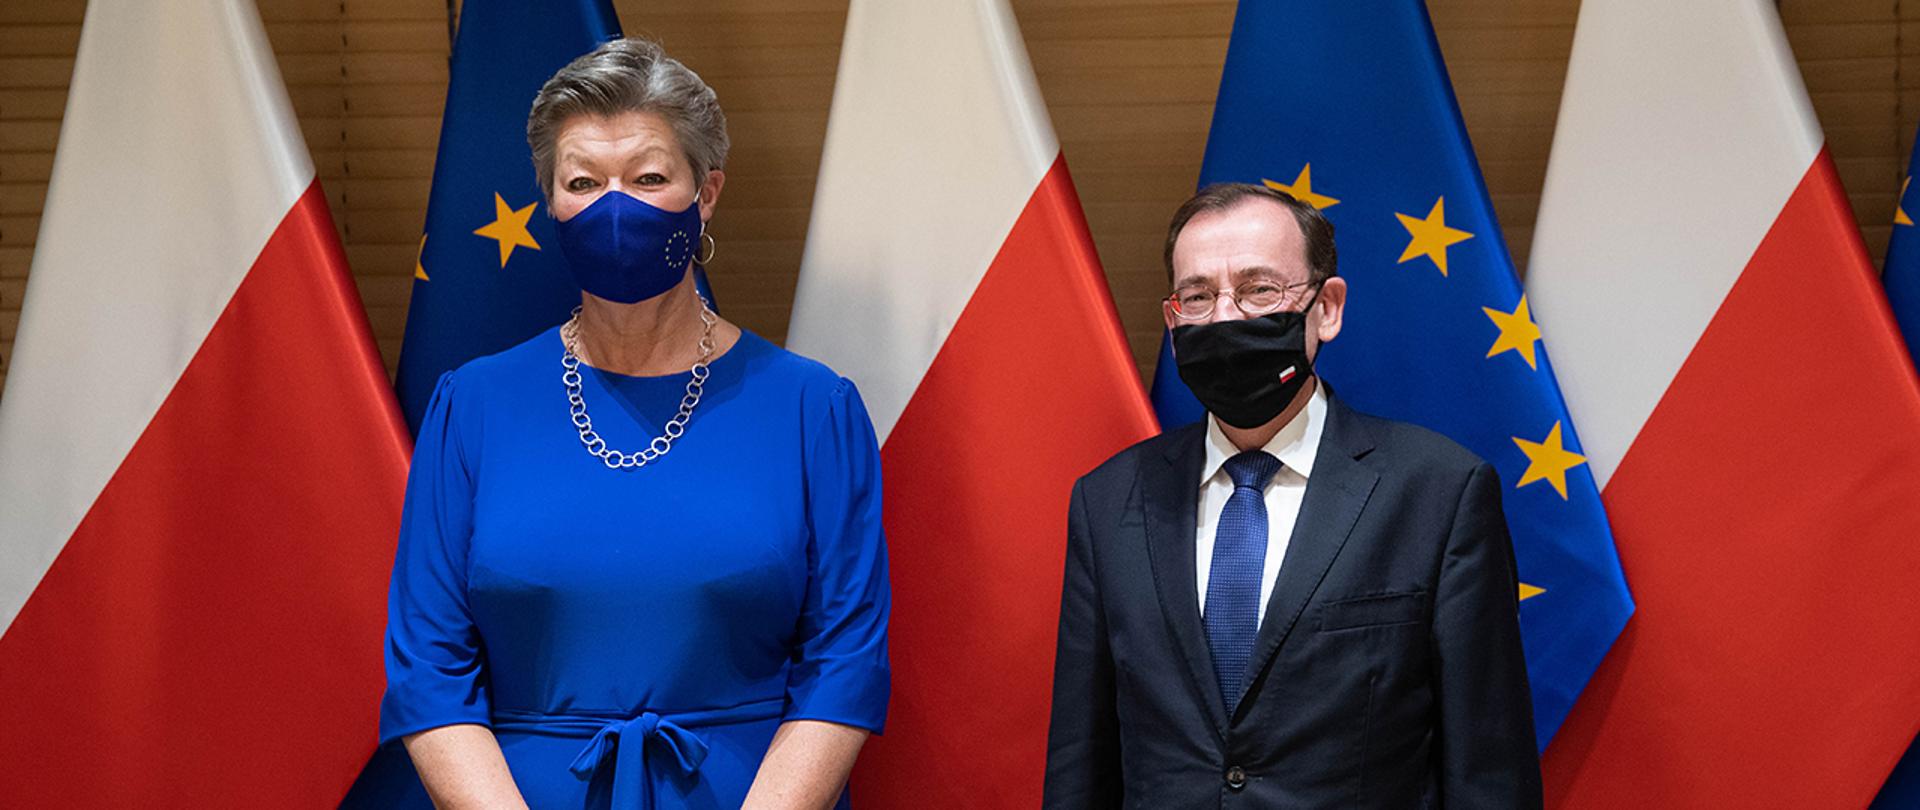 Minister Mariusz Kamiński and Ylva Johansson against the background of Polish and European Union flags.